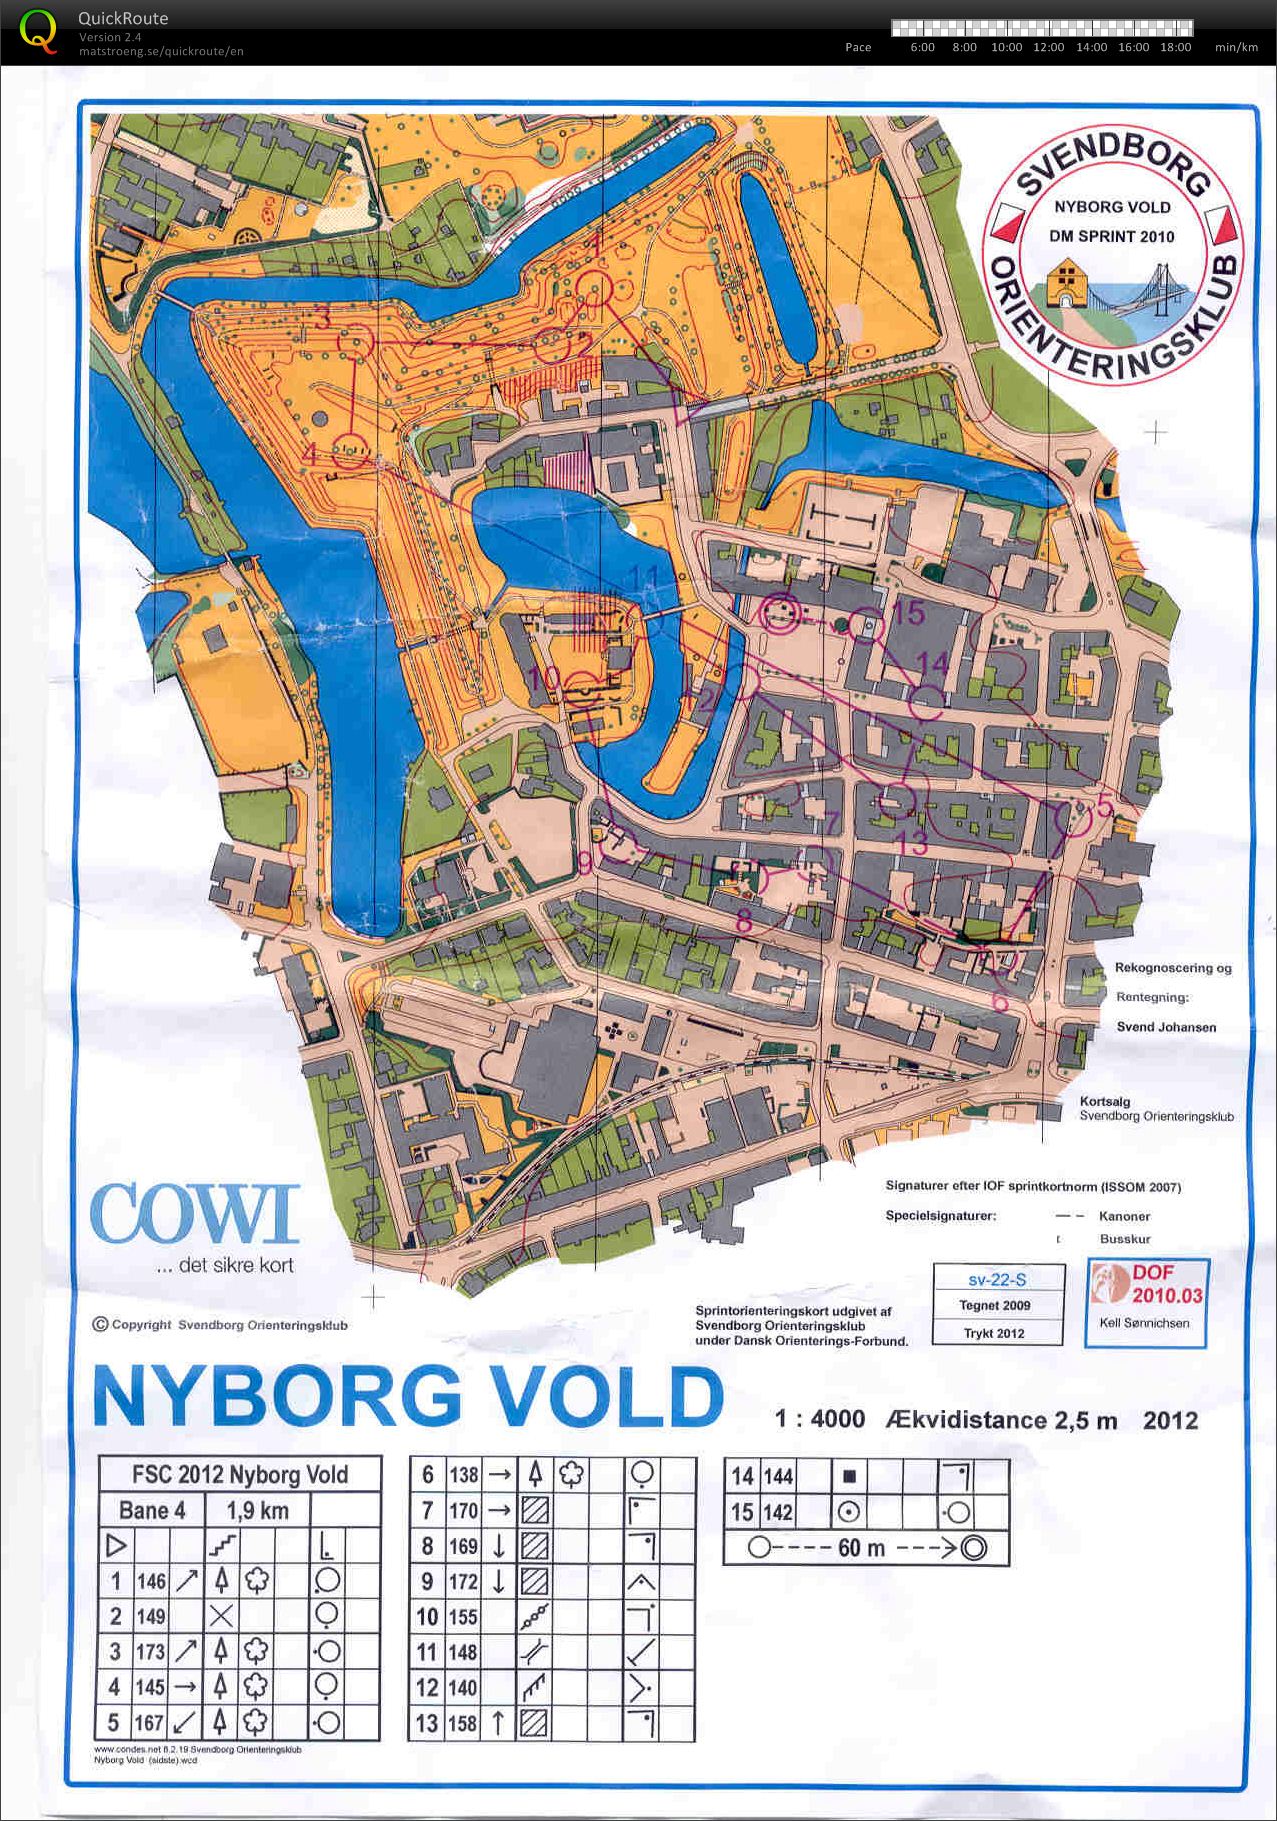 Nyborg Vold, Bane 4, D55, Pia Gade, 280512 (28.05.2012)